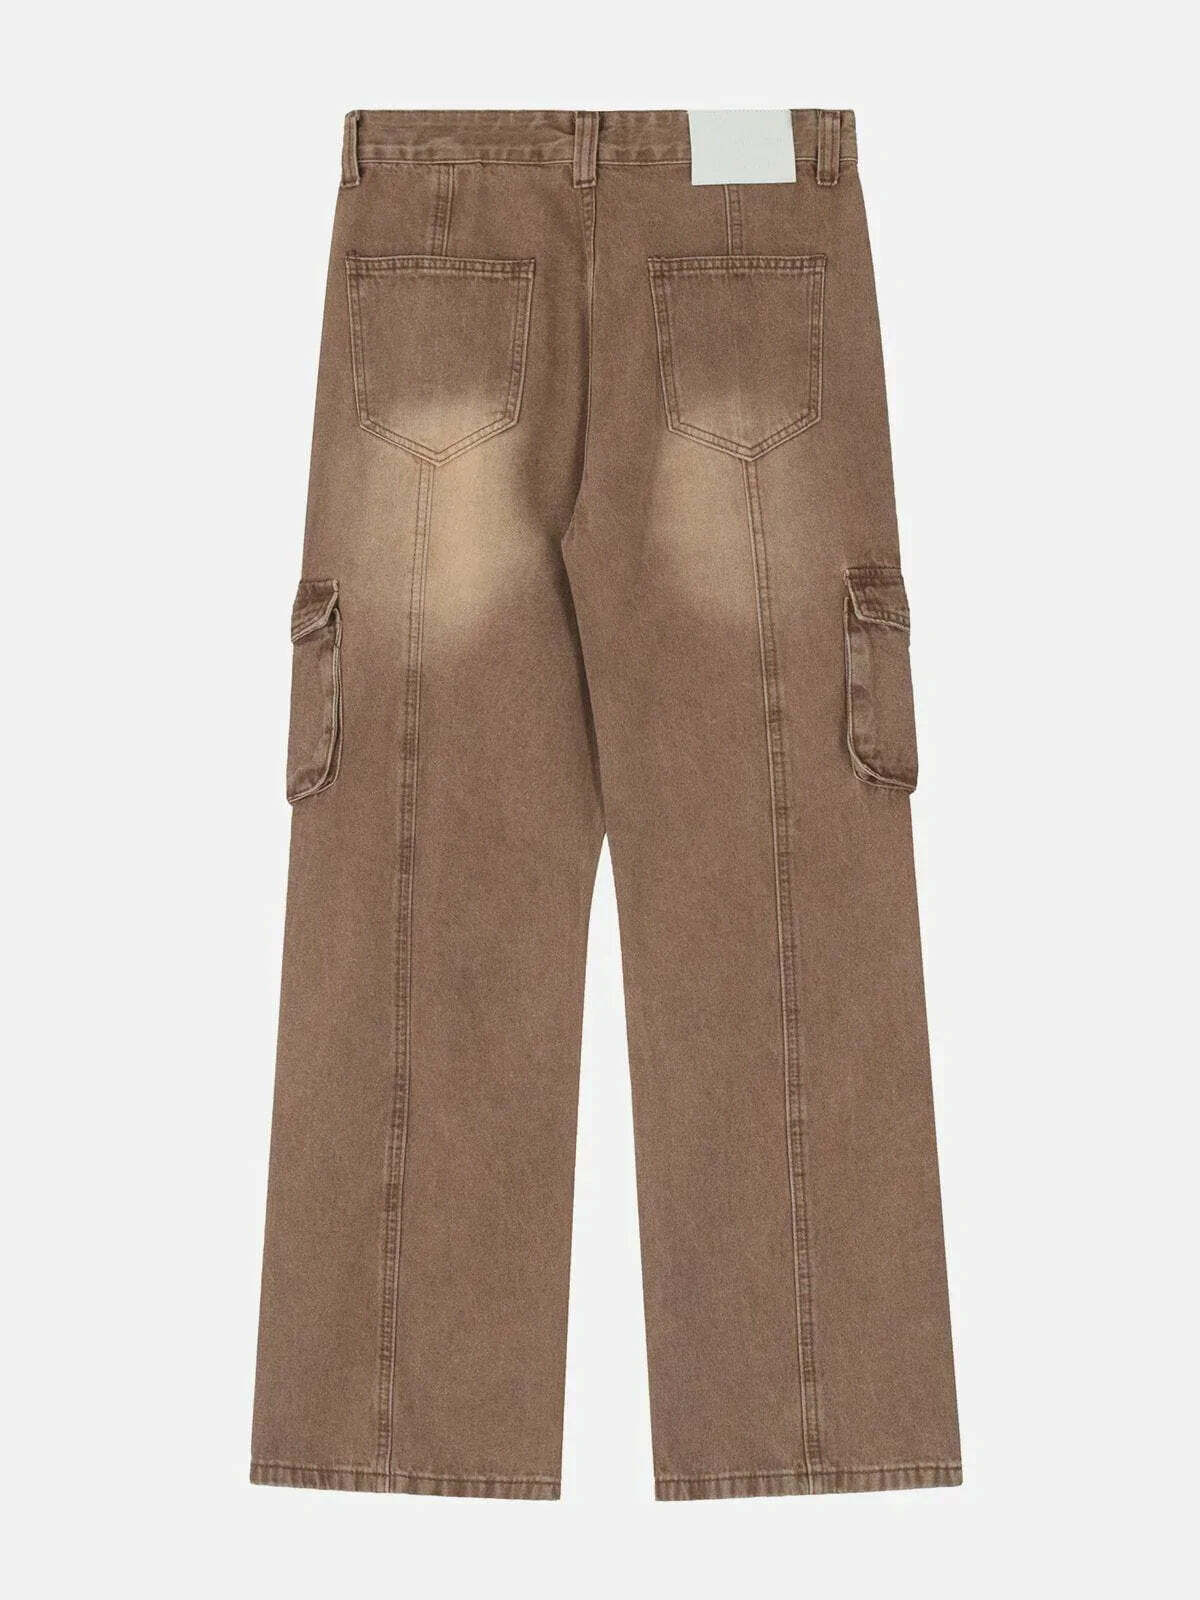 multipocket vintage jeans edgy & retro streetwear 8366